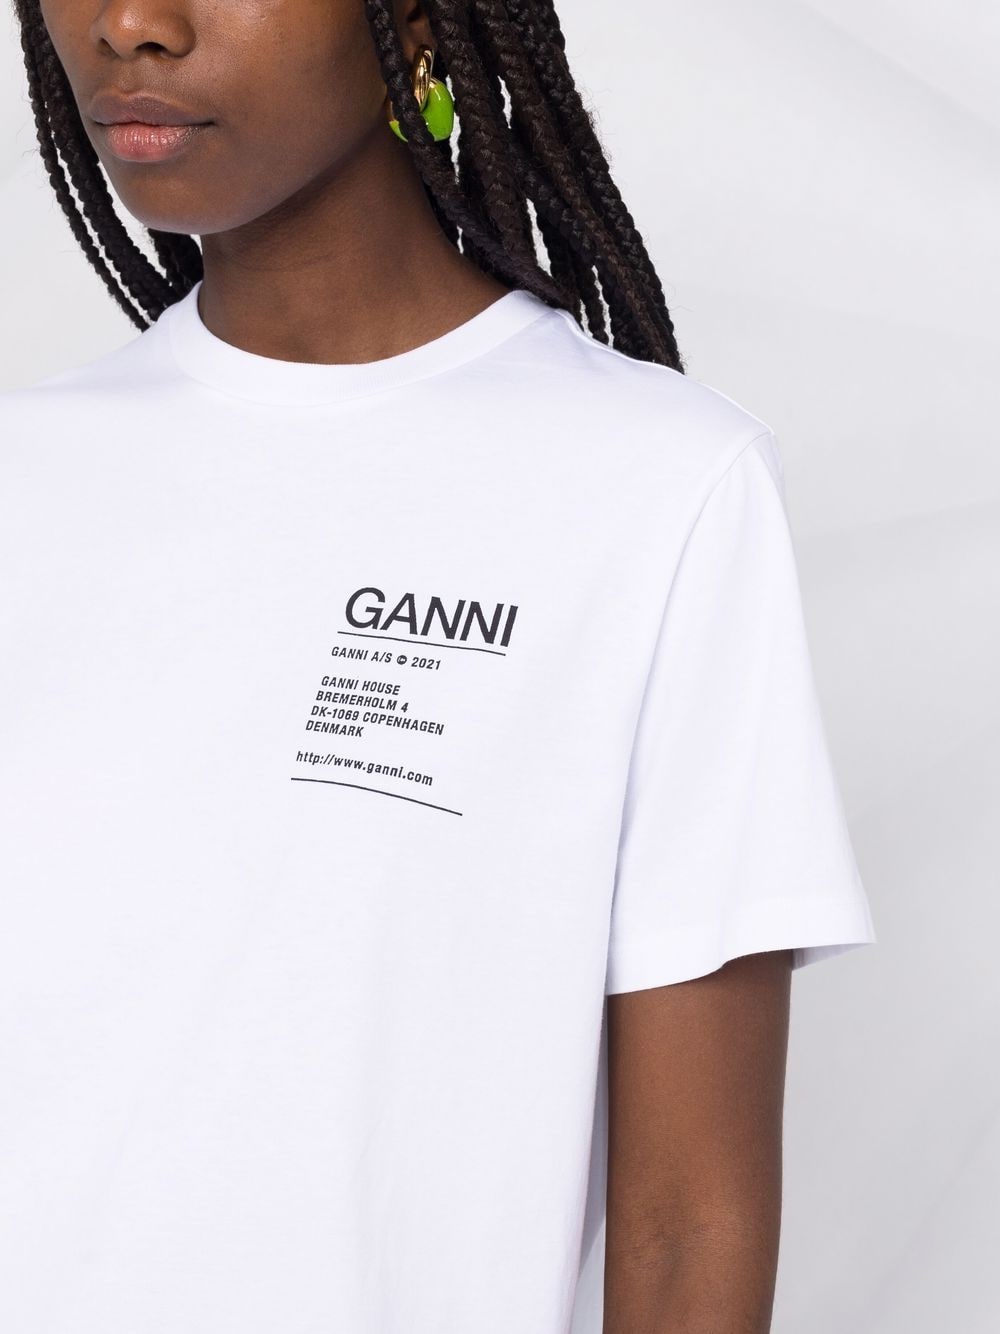 фото Ganni футболка с принтом